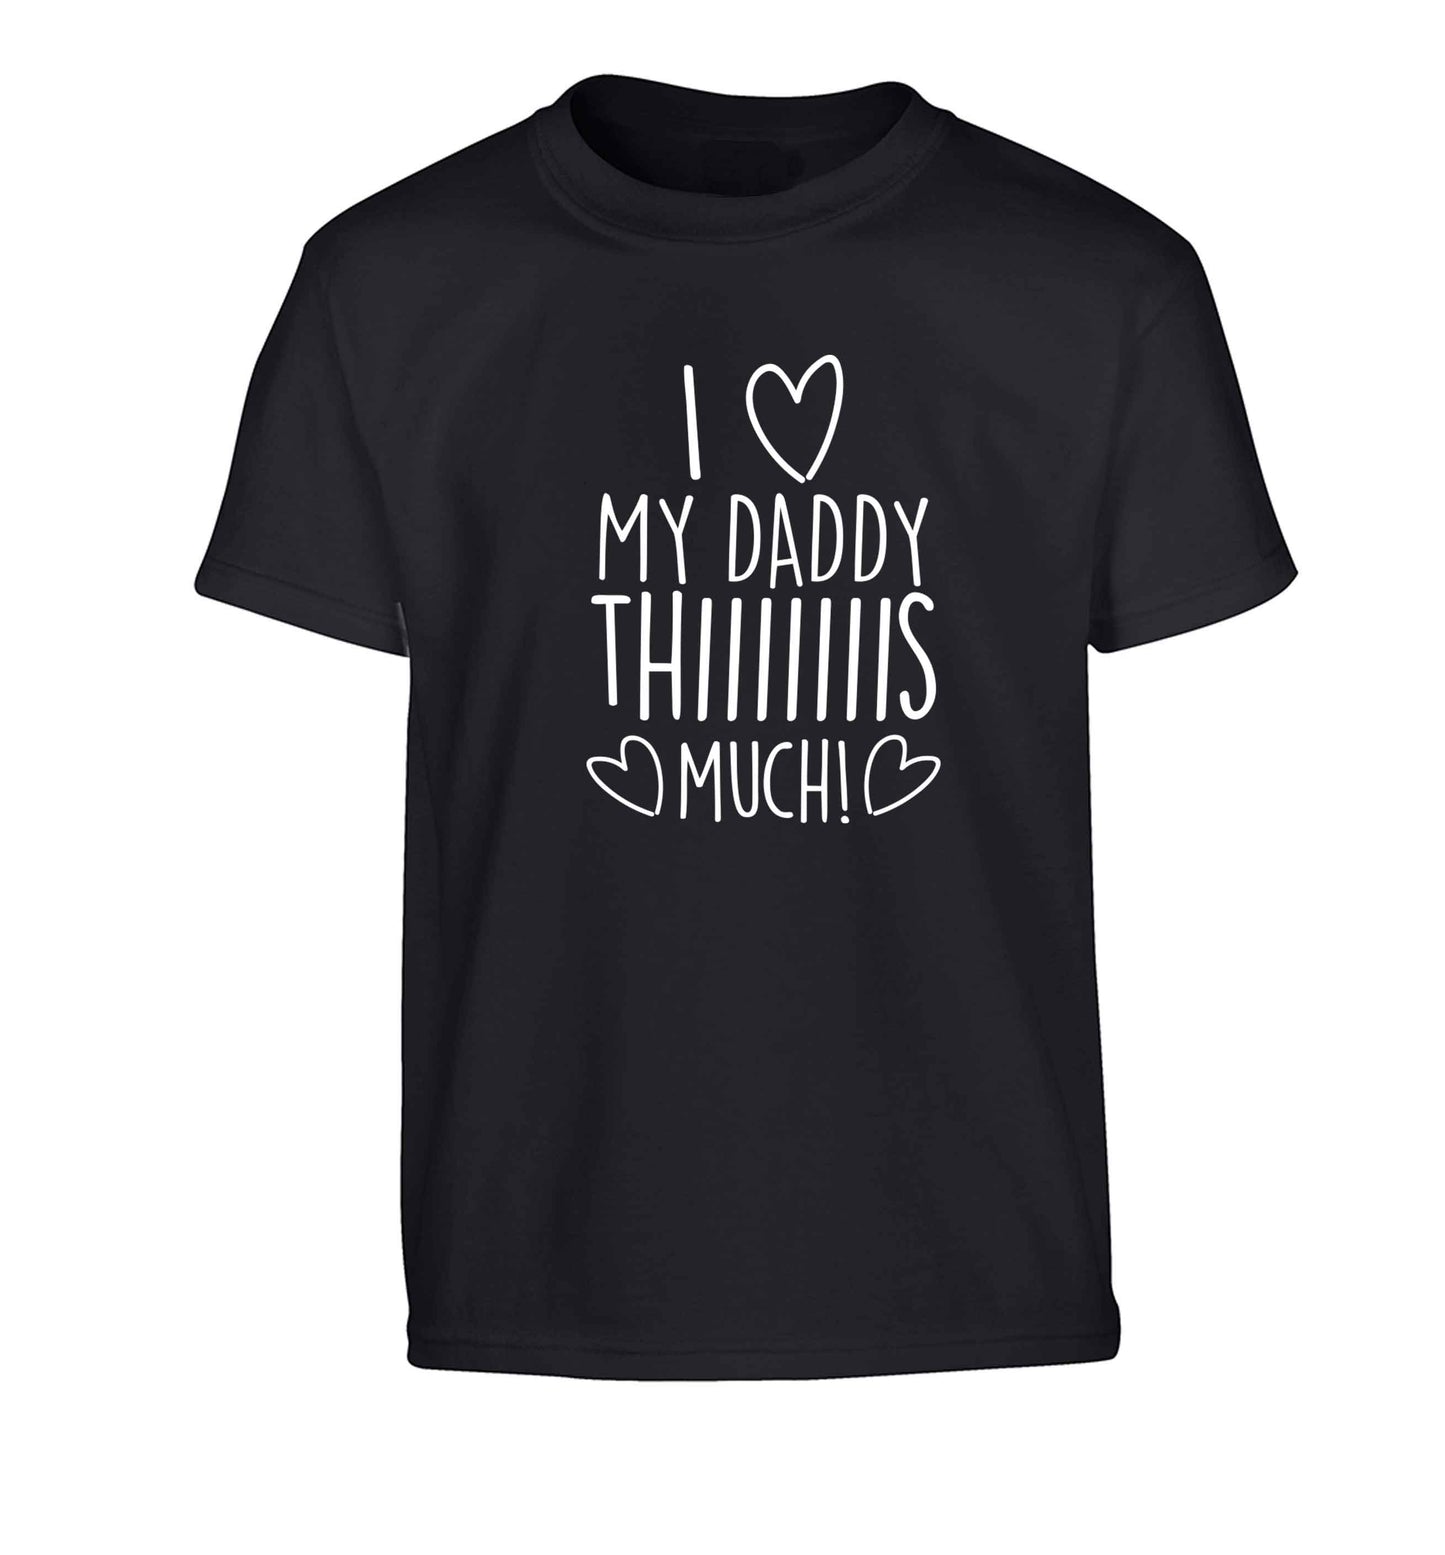 I love my daddy thiiiiis much! Children's black Tshirt 12-13 Years